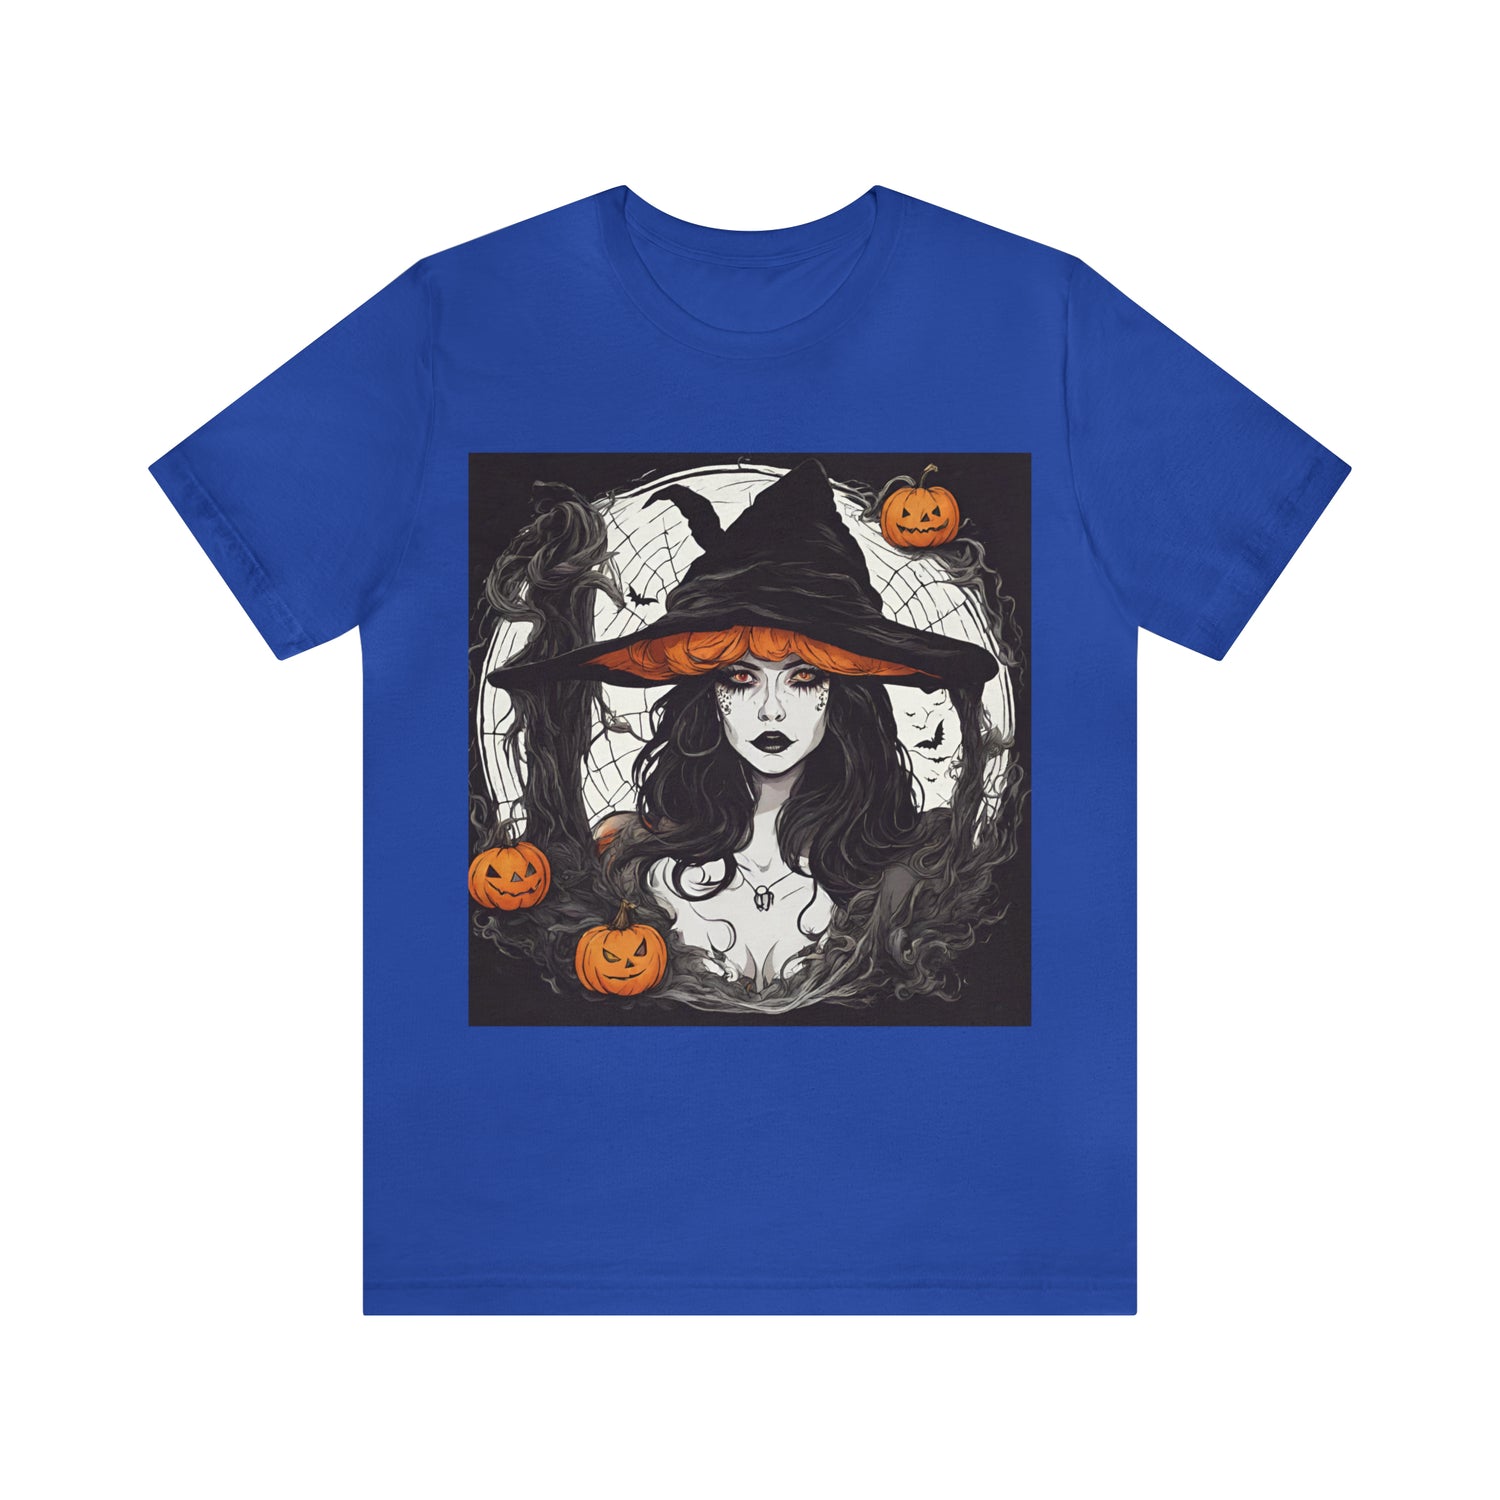 True Royal T-Shirt Tshirt Design Halloween Gift for Friend and Family Short Sleeved Shirt Petrova Designs